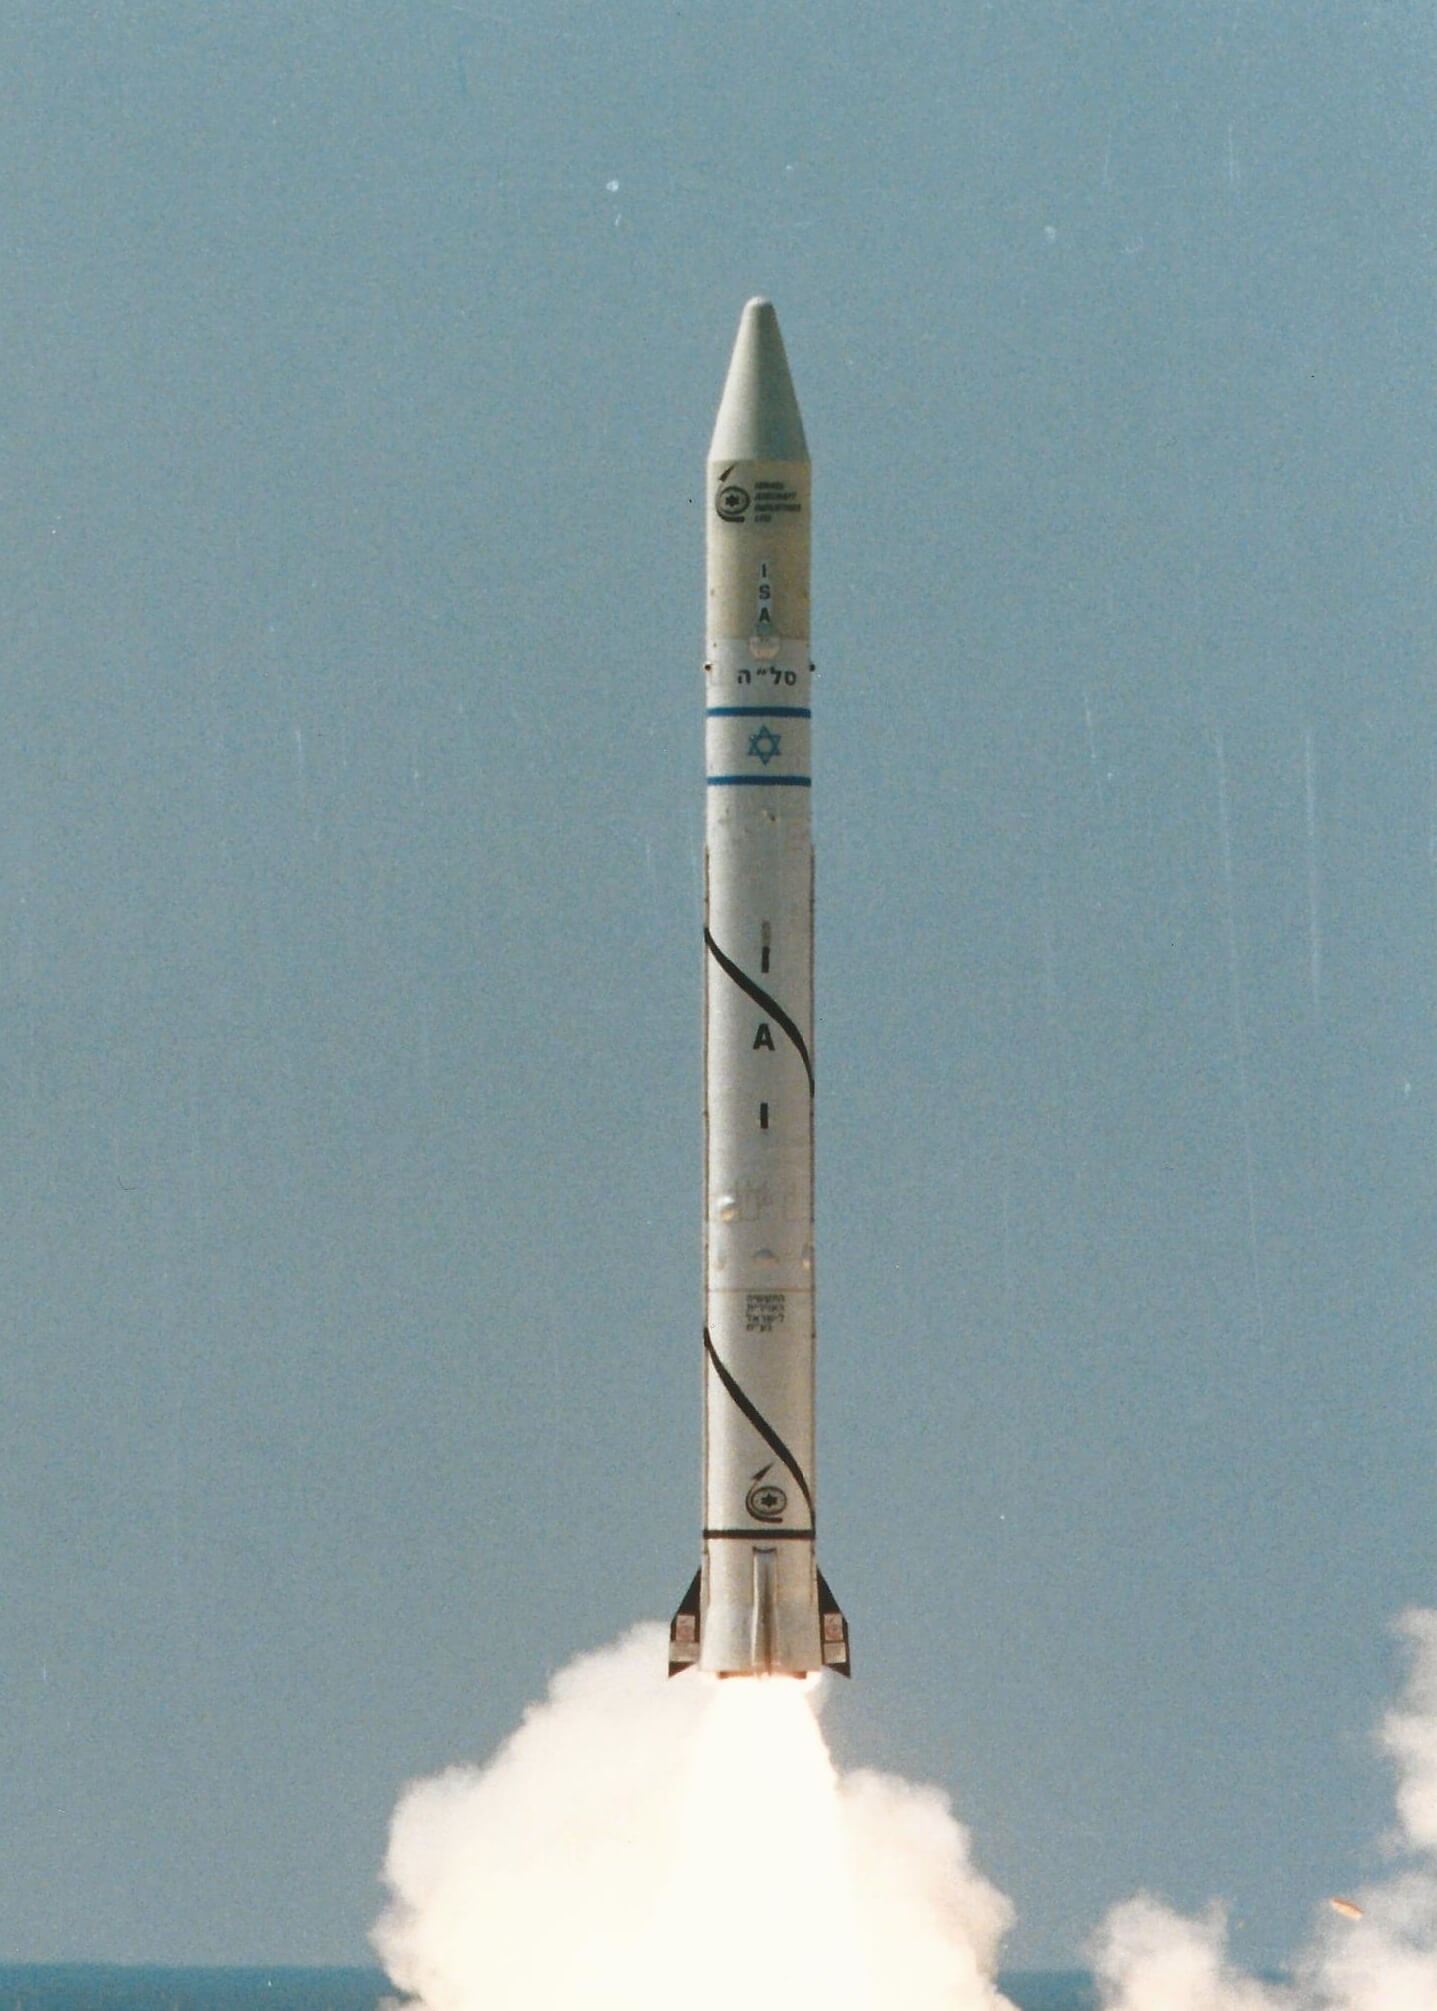 Launch of the Ofek 3 satellite. Photo: Tal Inbar